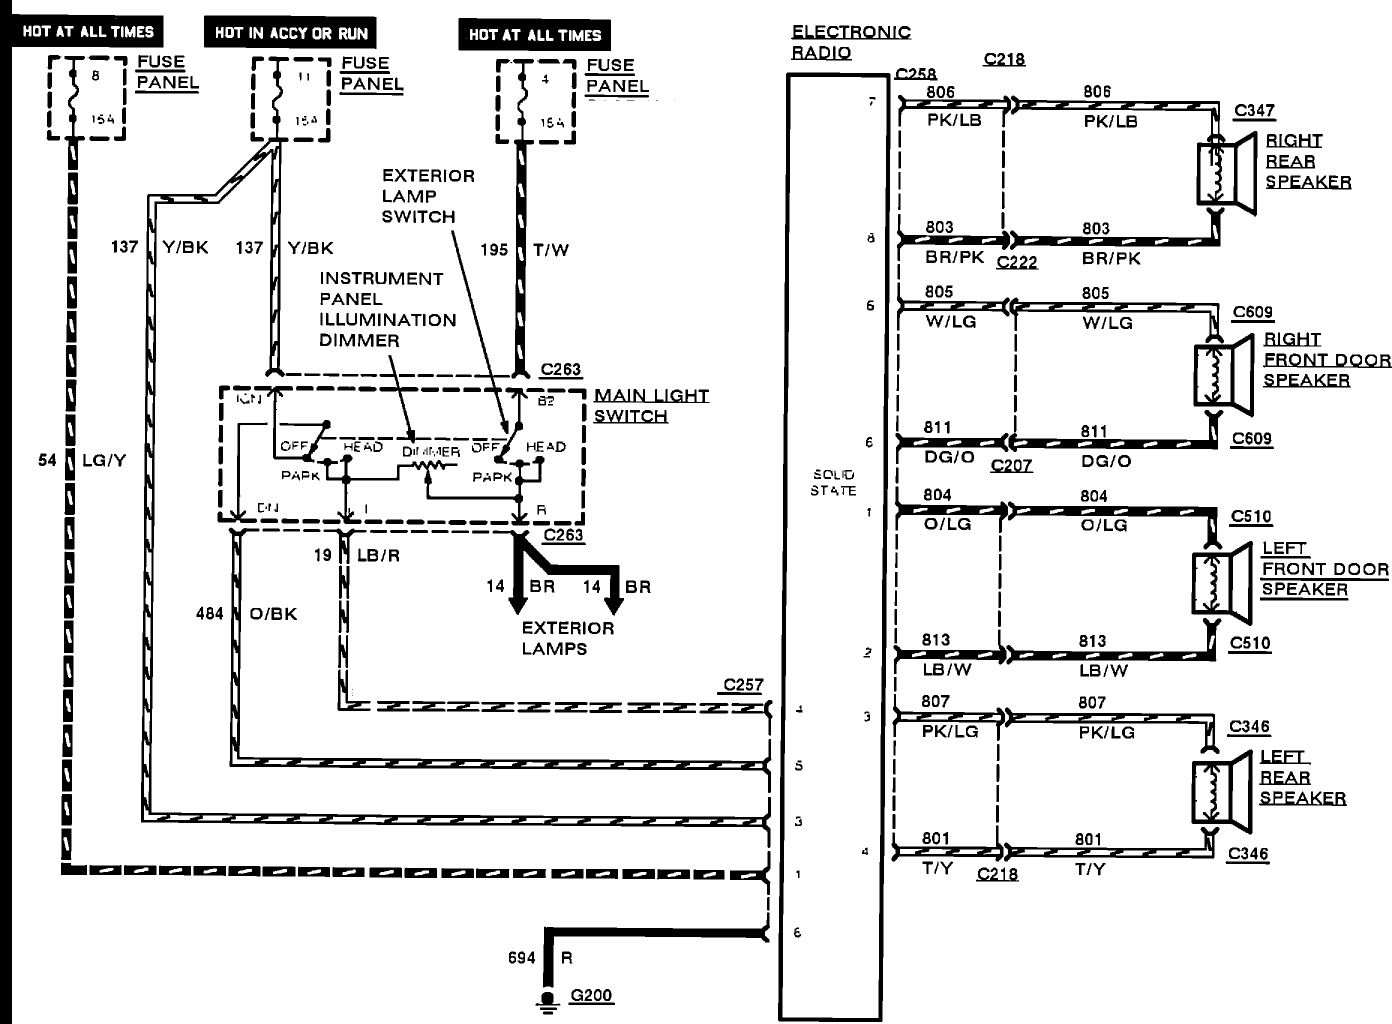 1992 Ford tempo radio wiring diagram #7